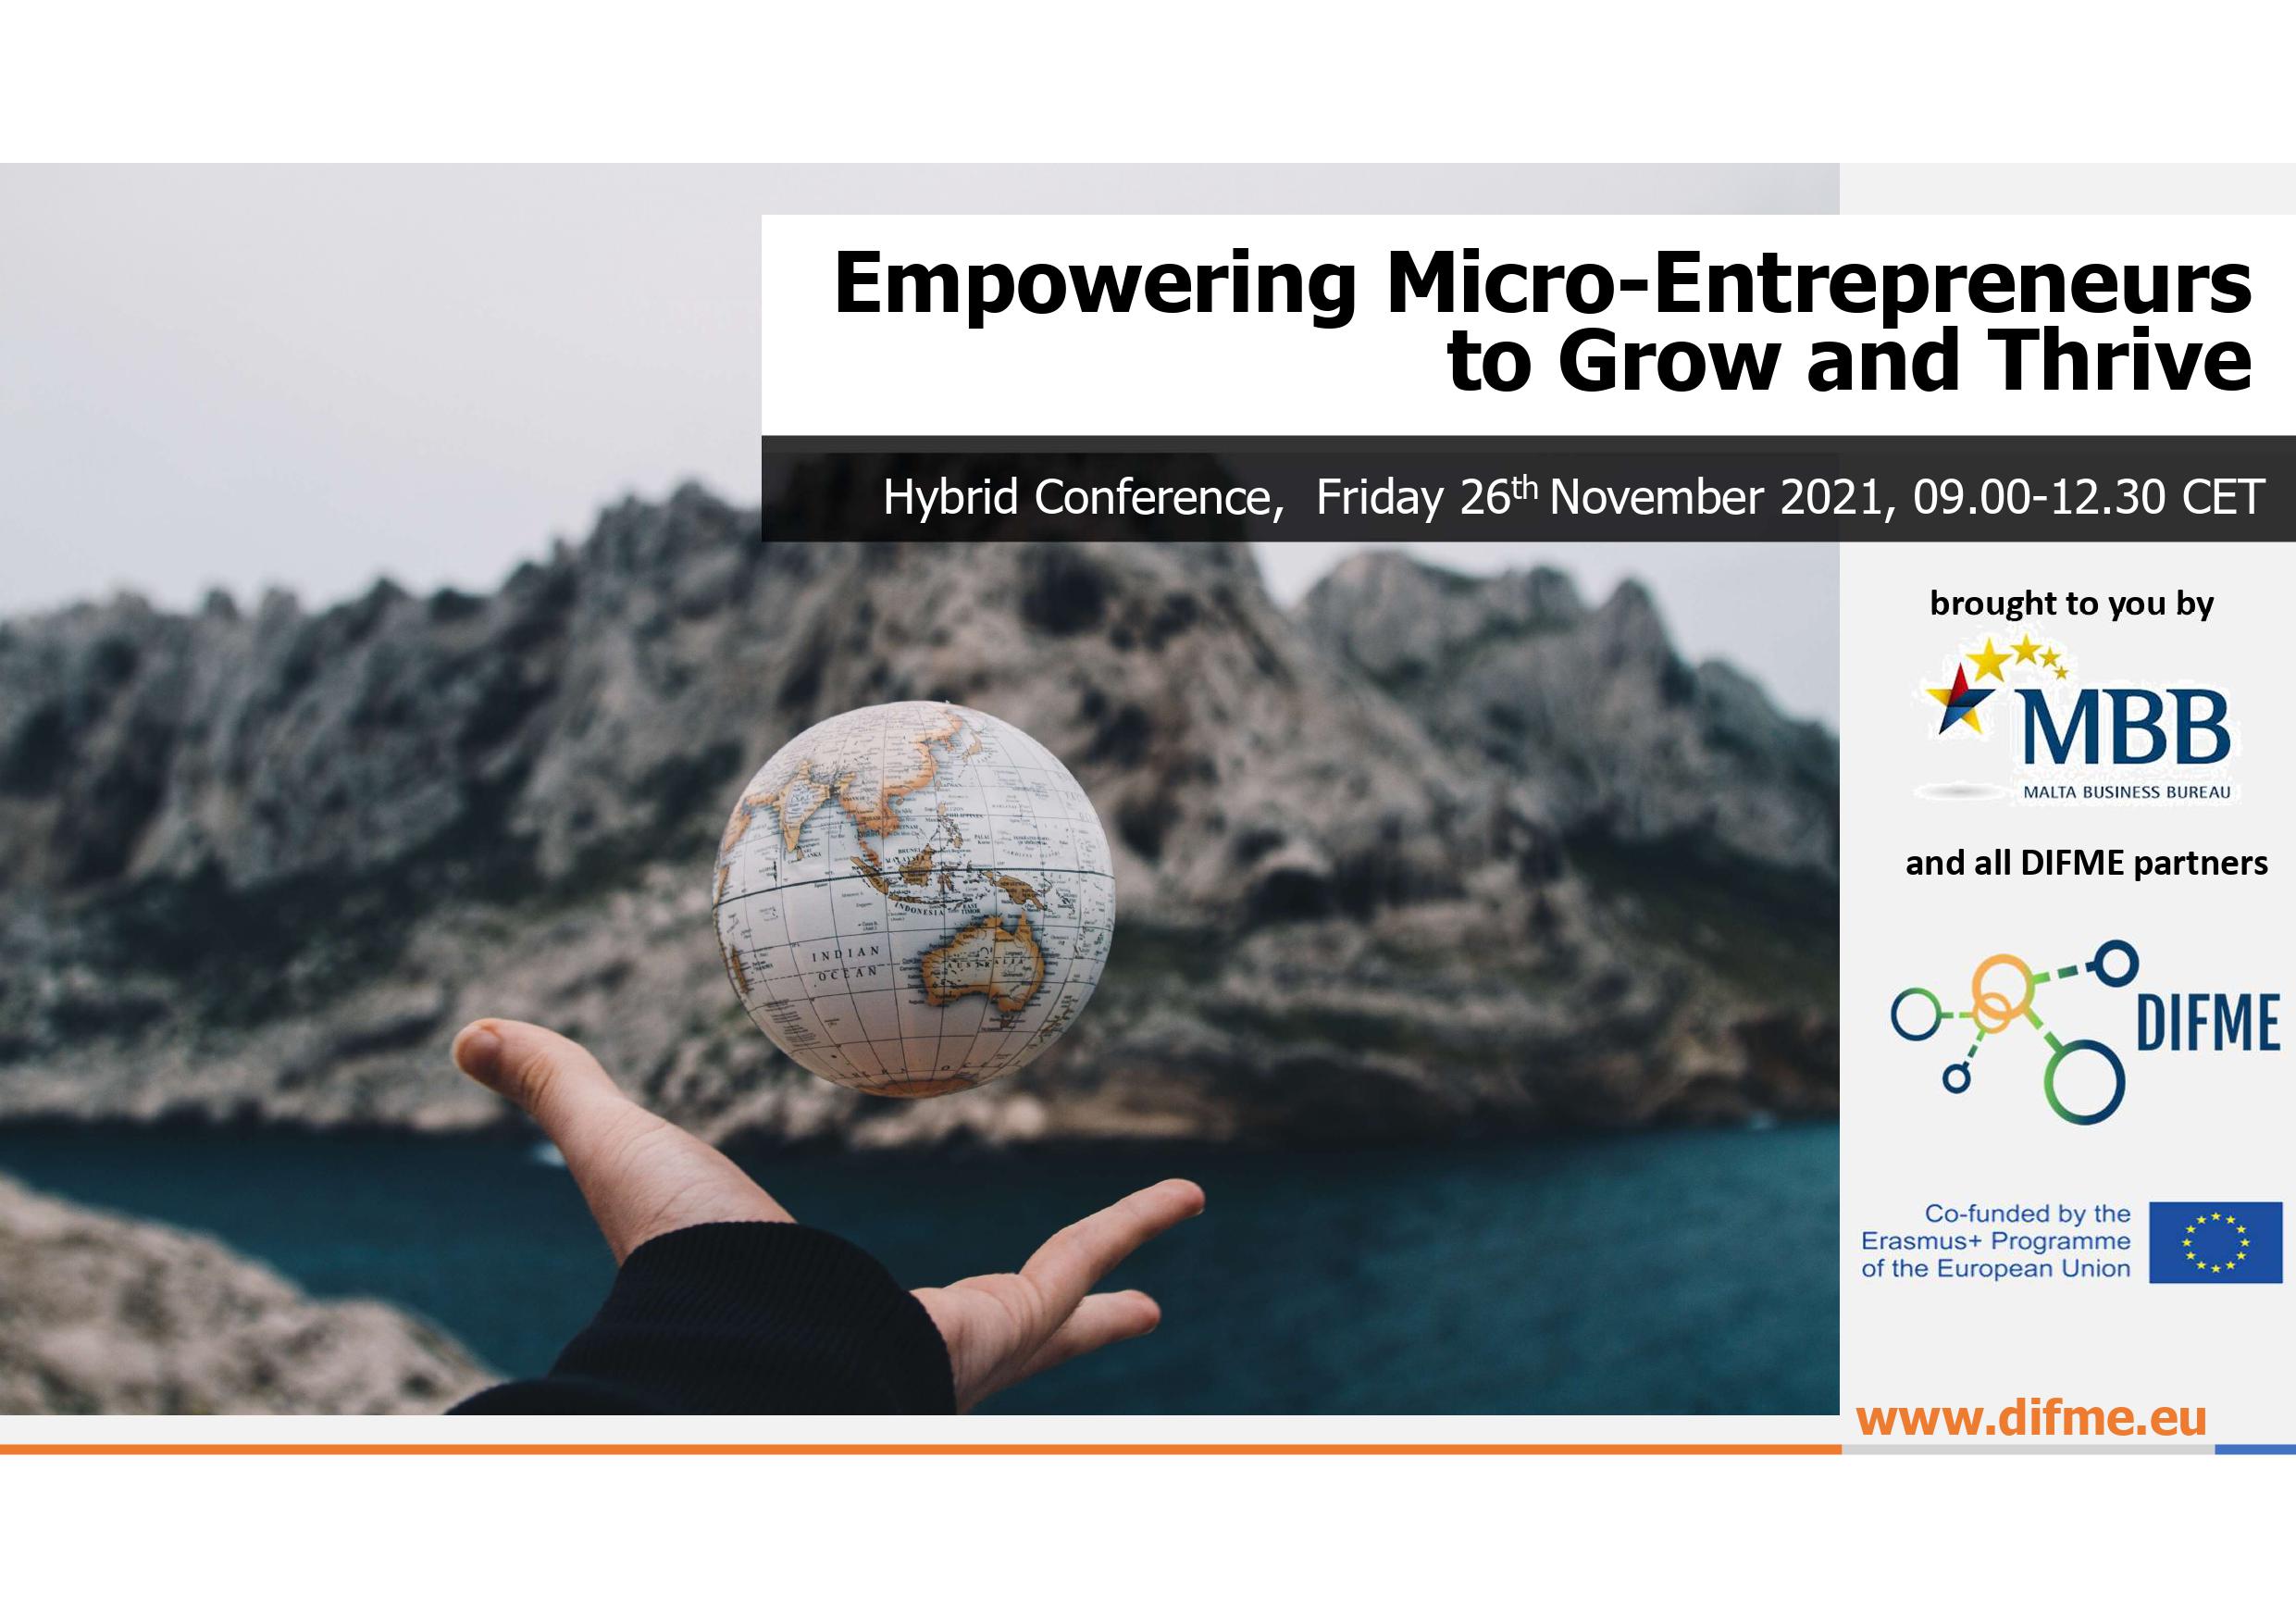 Hybrid Conference on Empowering Entrepreneurs